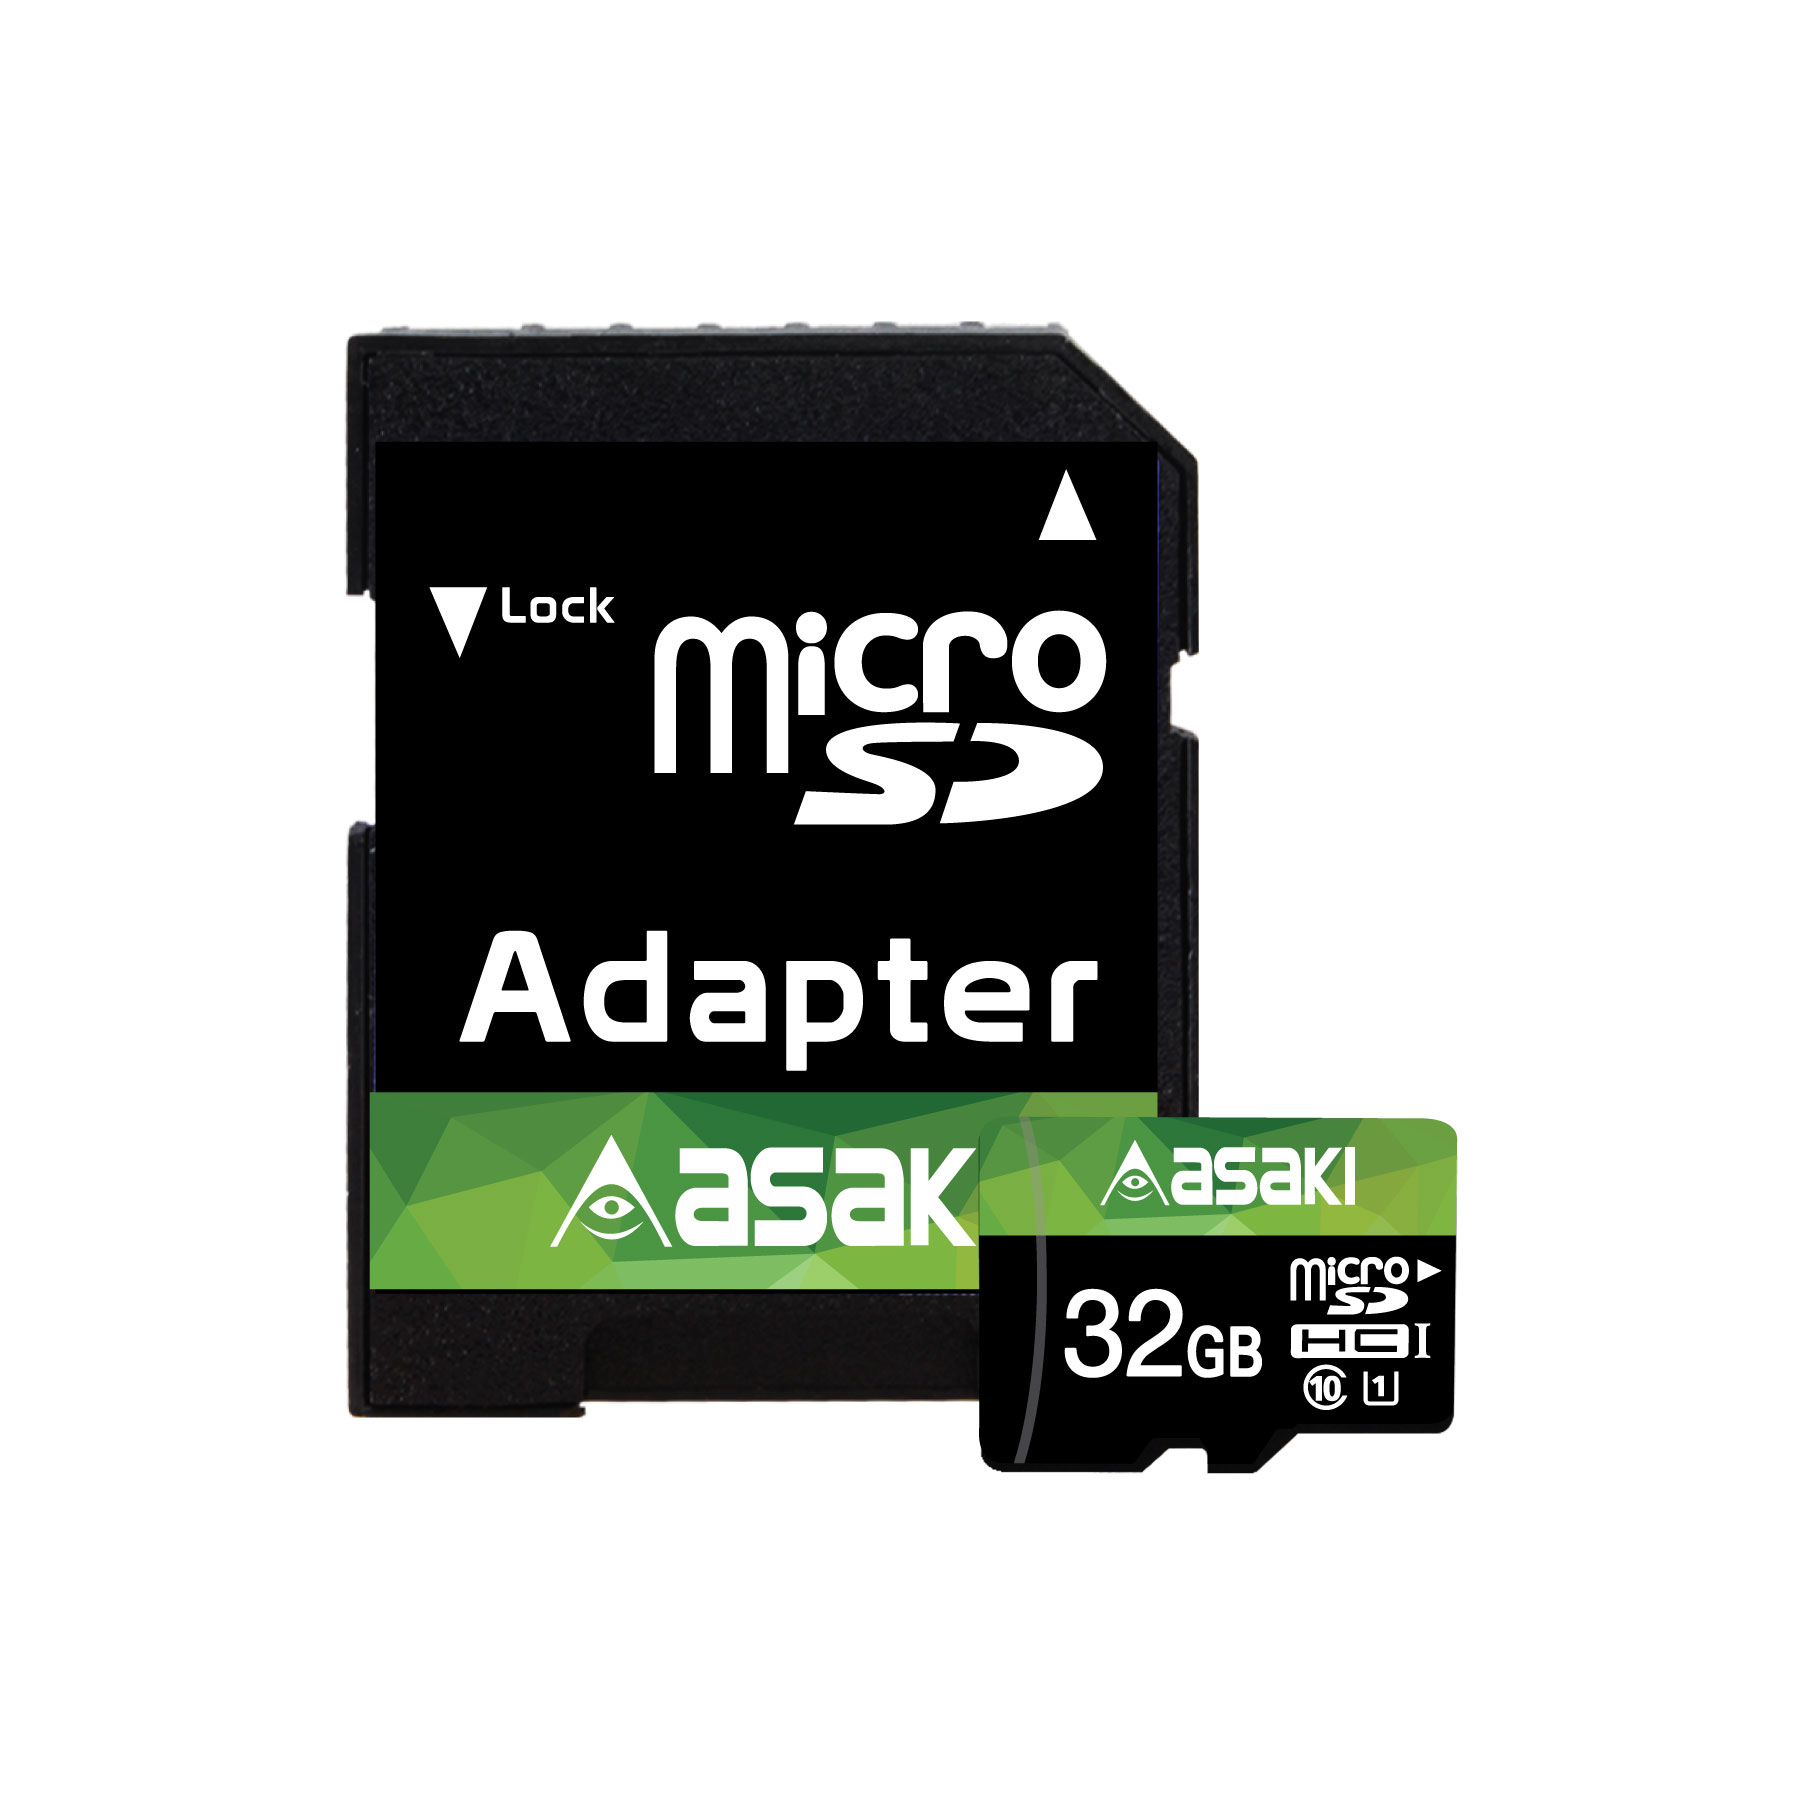 Asaki การ์ดเก็บข้อมูล ความจุ 32 GB. รุ่น A-MU5000